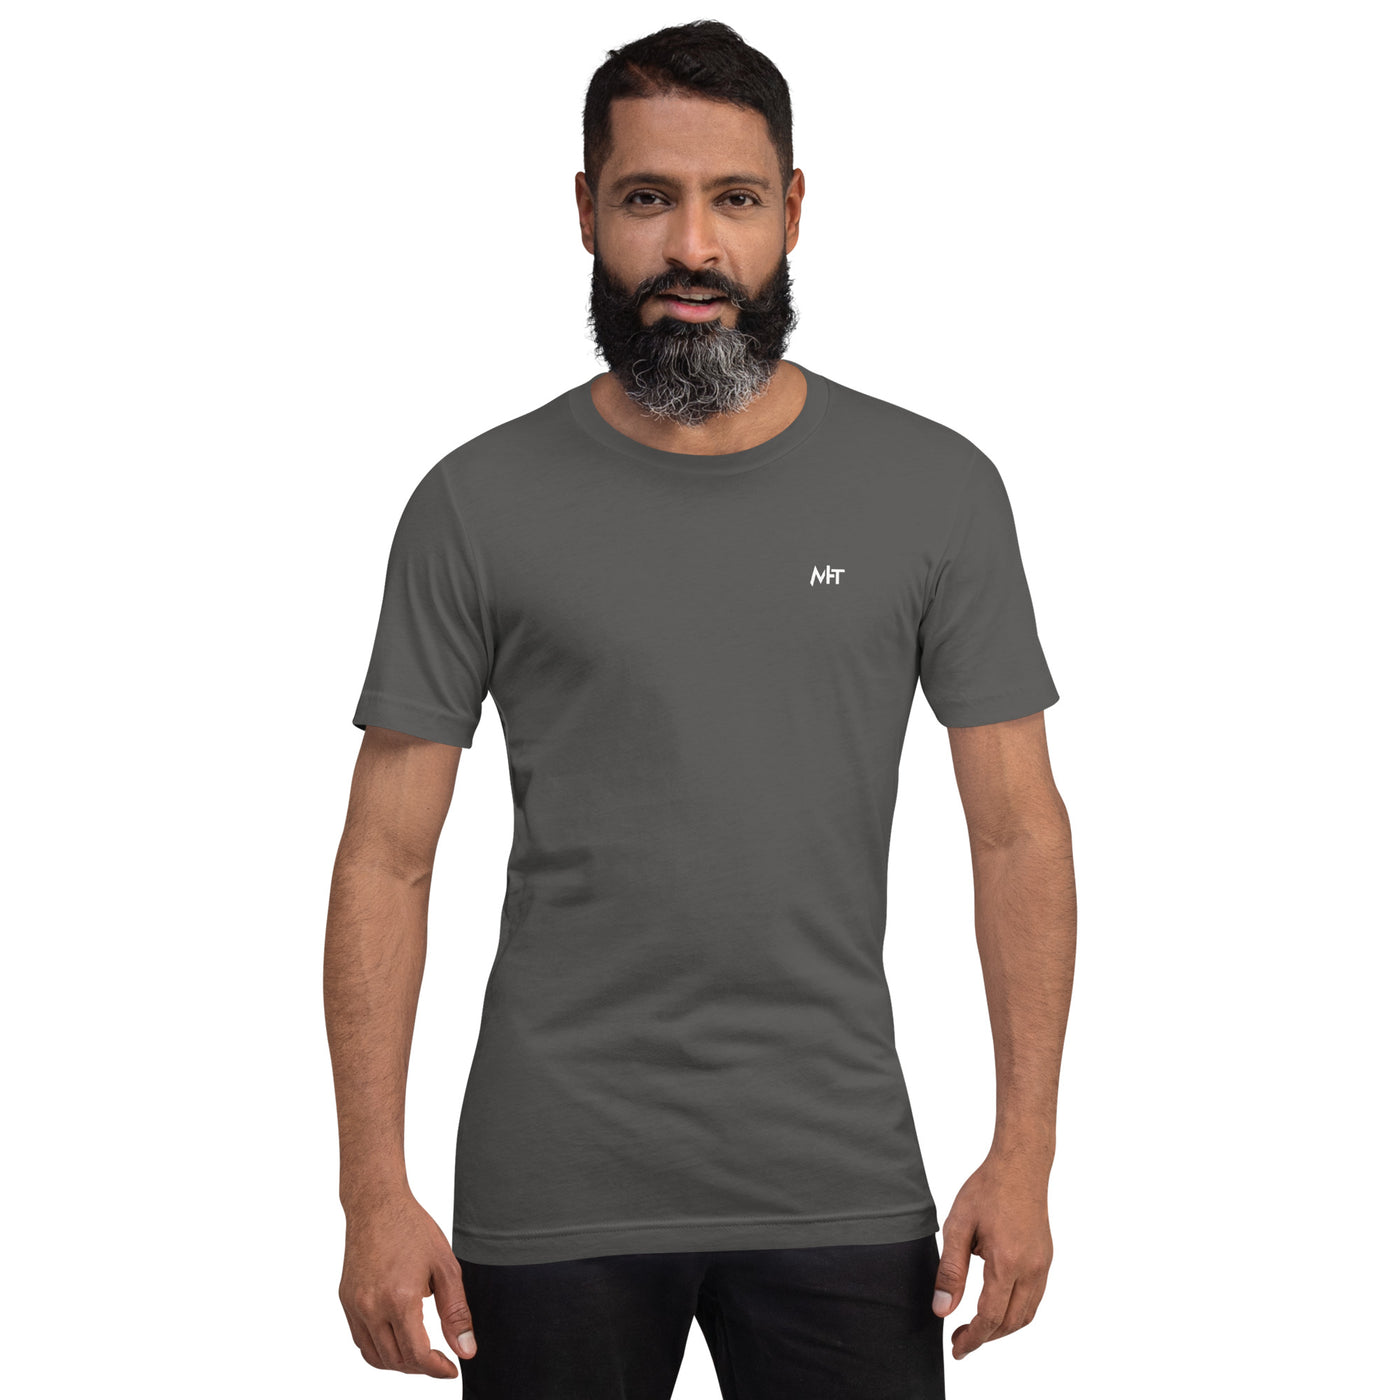 Plan Bitcoin V2 Unisex t-shirt